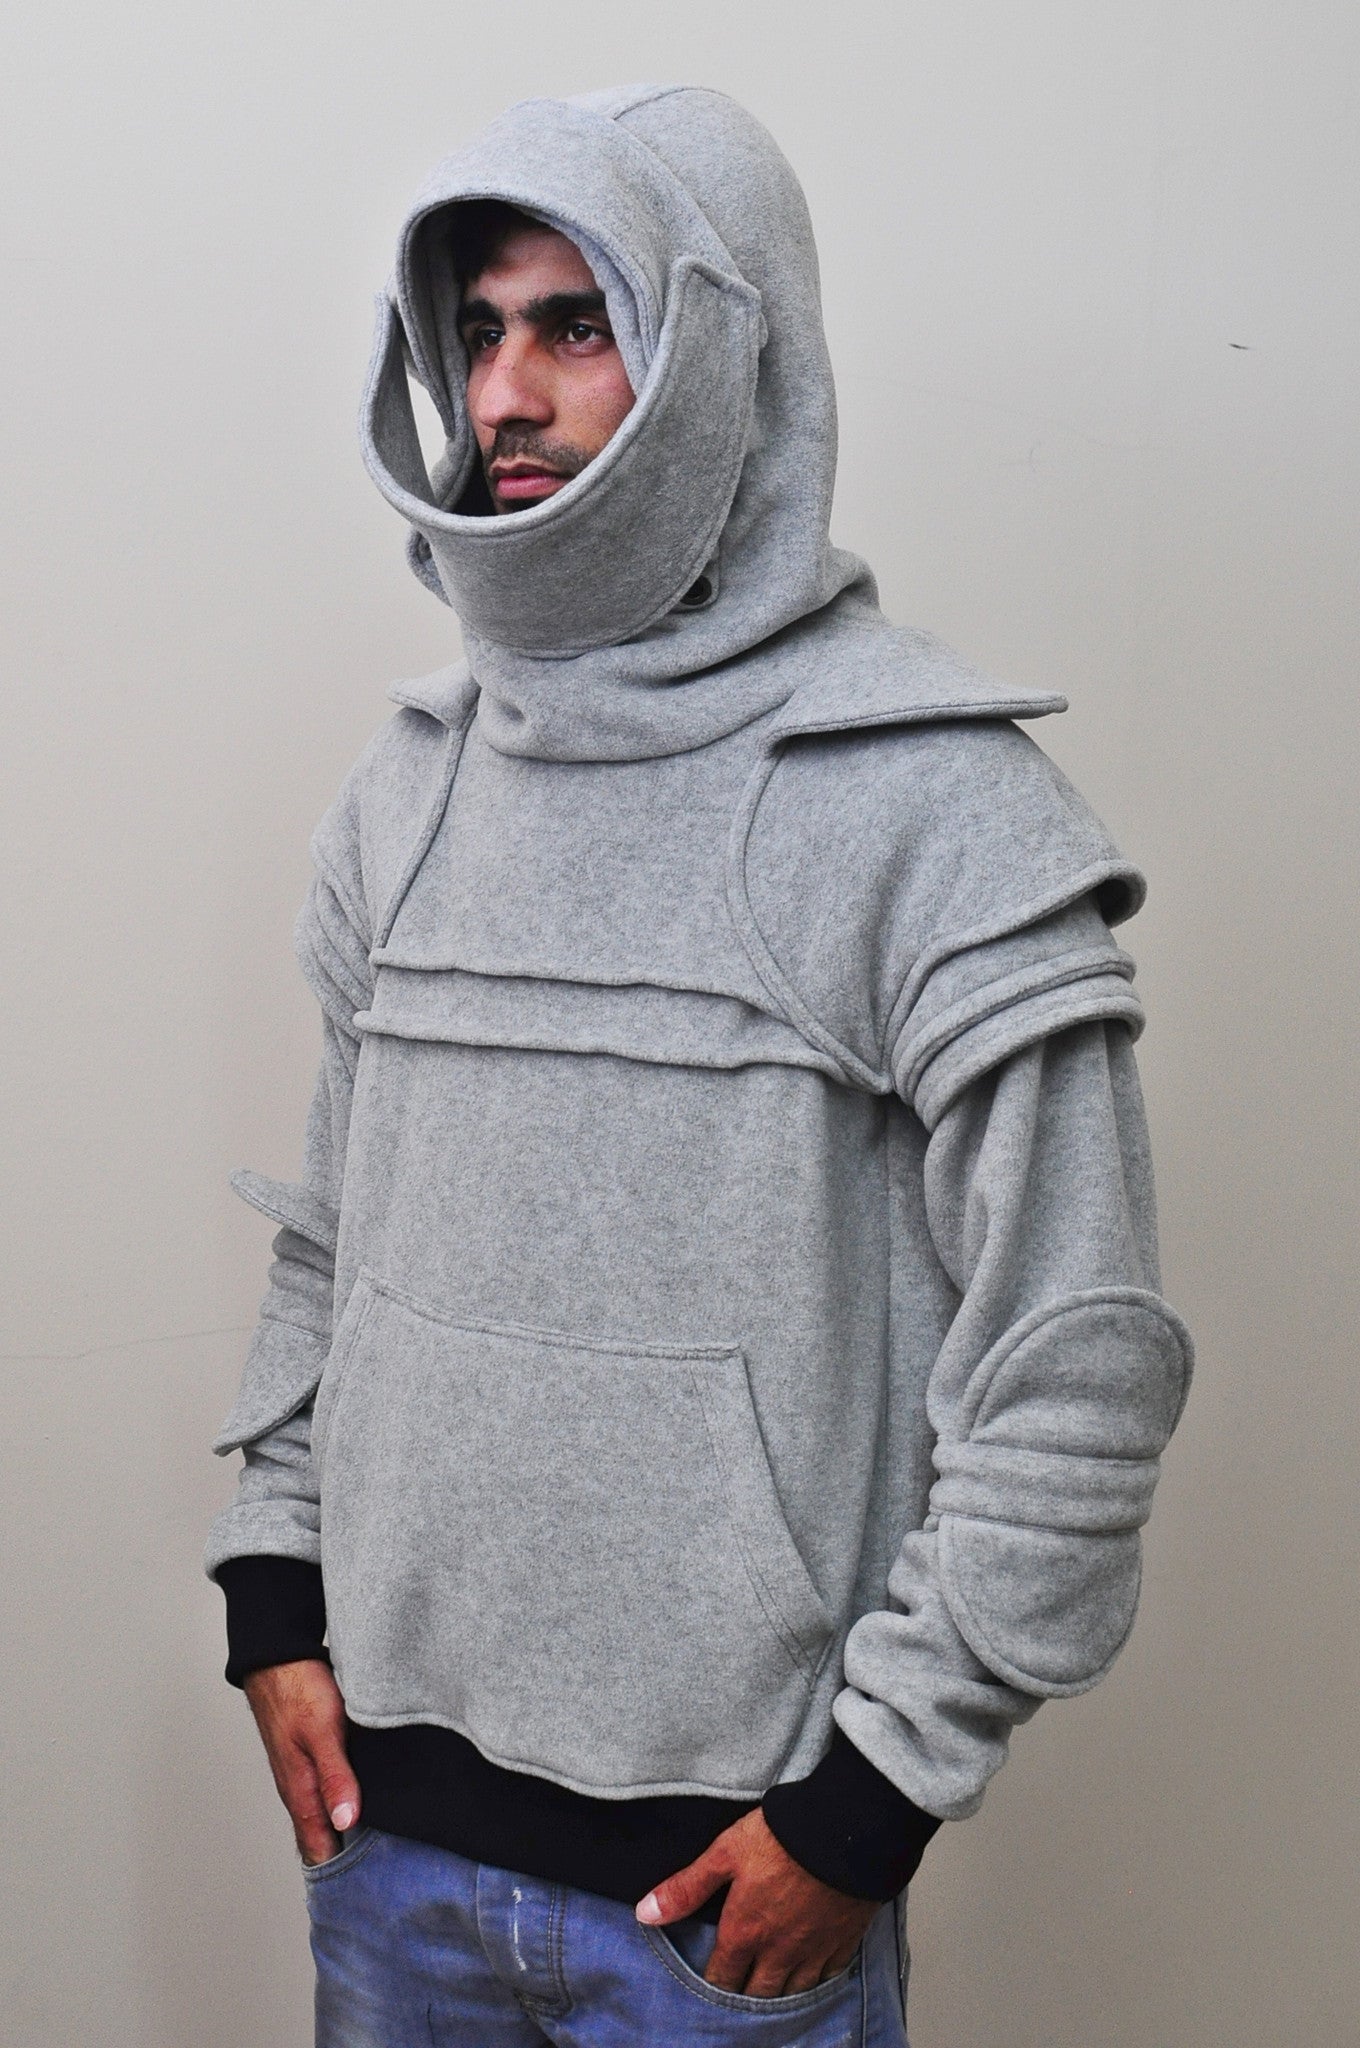 Men Duncan Armored Knight Hoodie Sweatshirt Polar Fleece Assassin's Creed